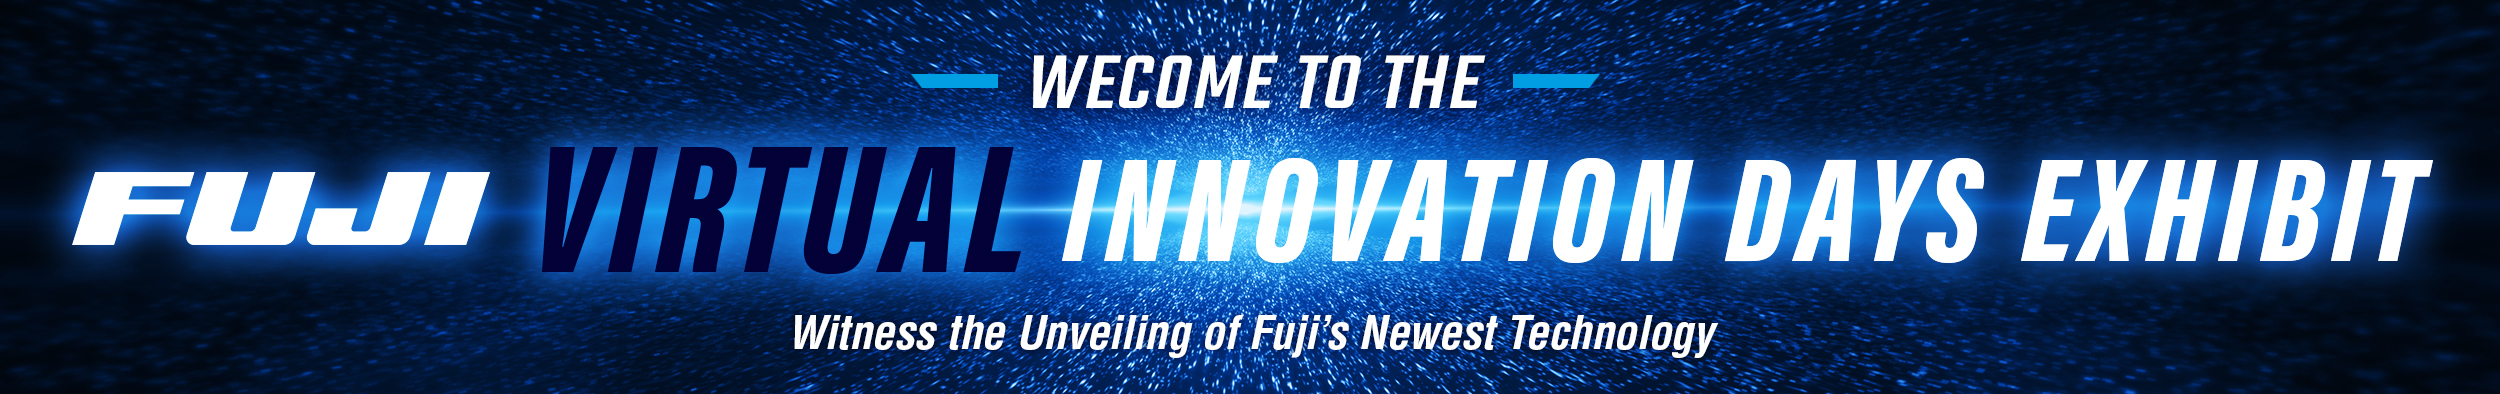 Fuji Virtual Innovation Days Banner